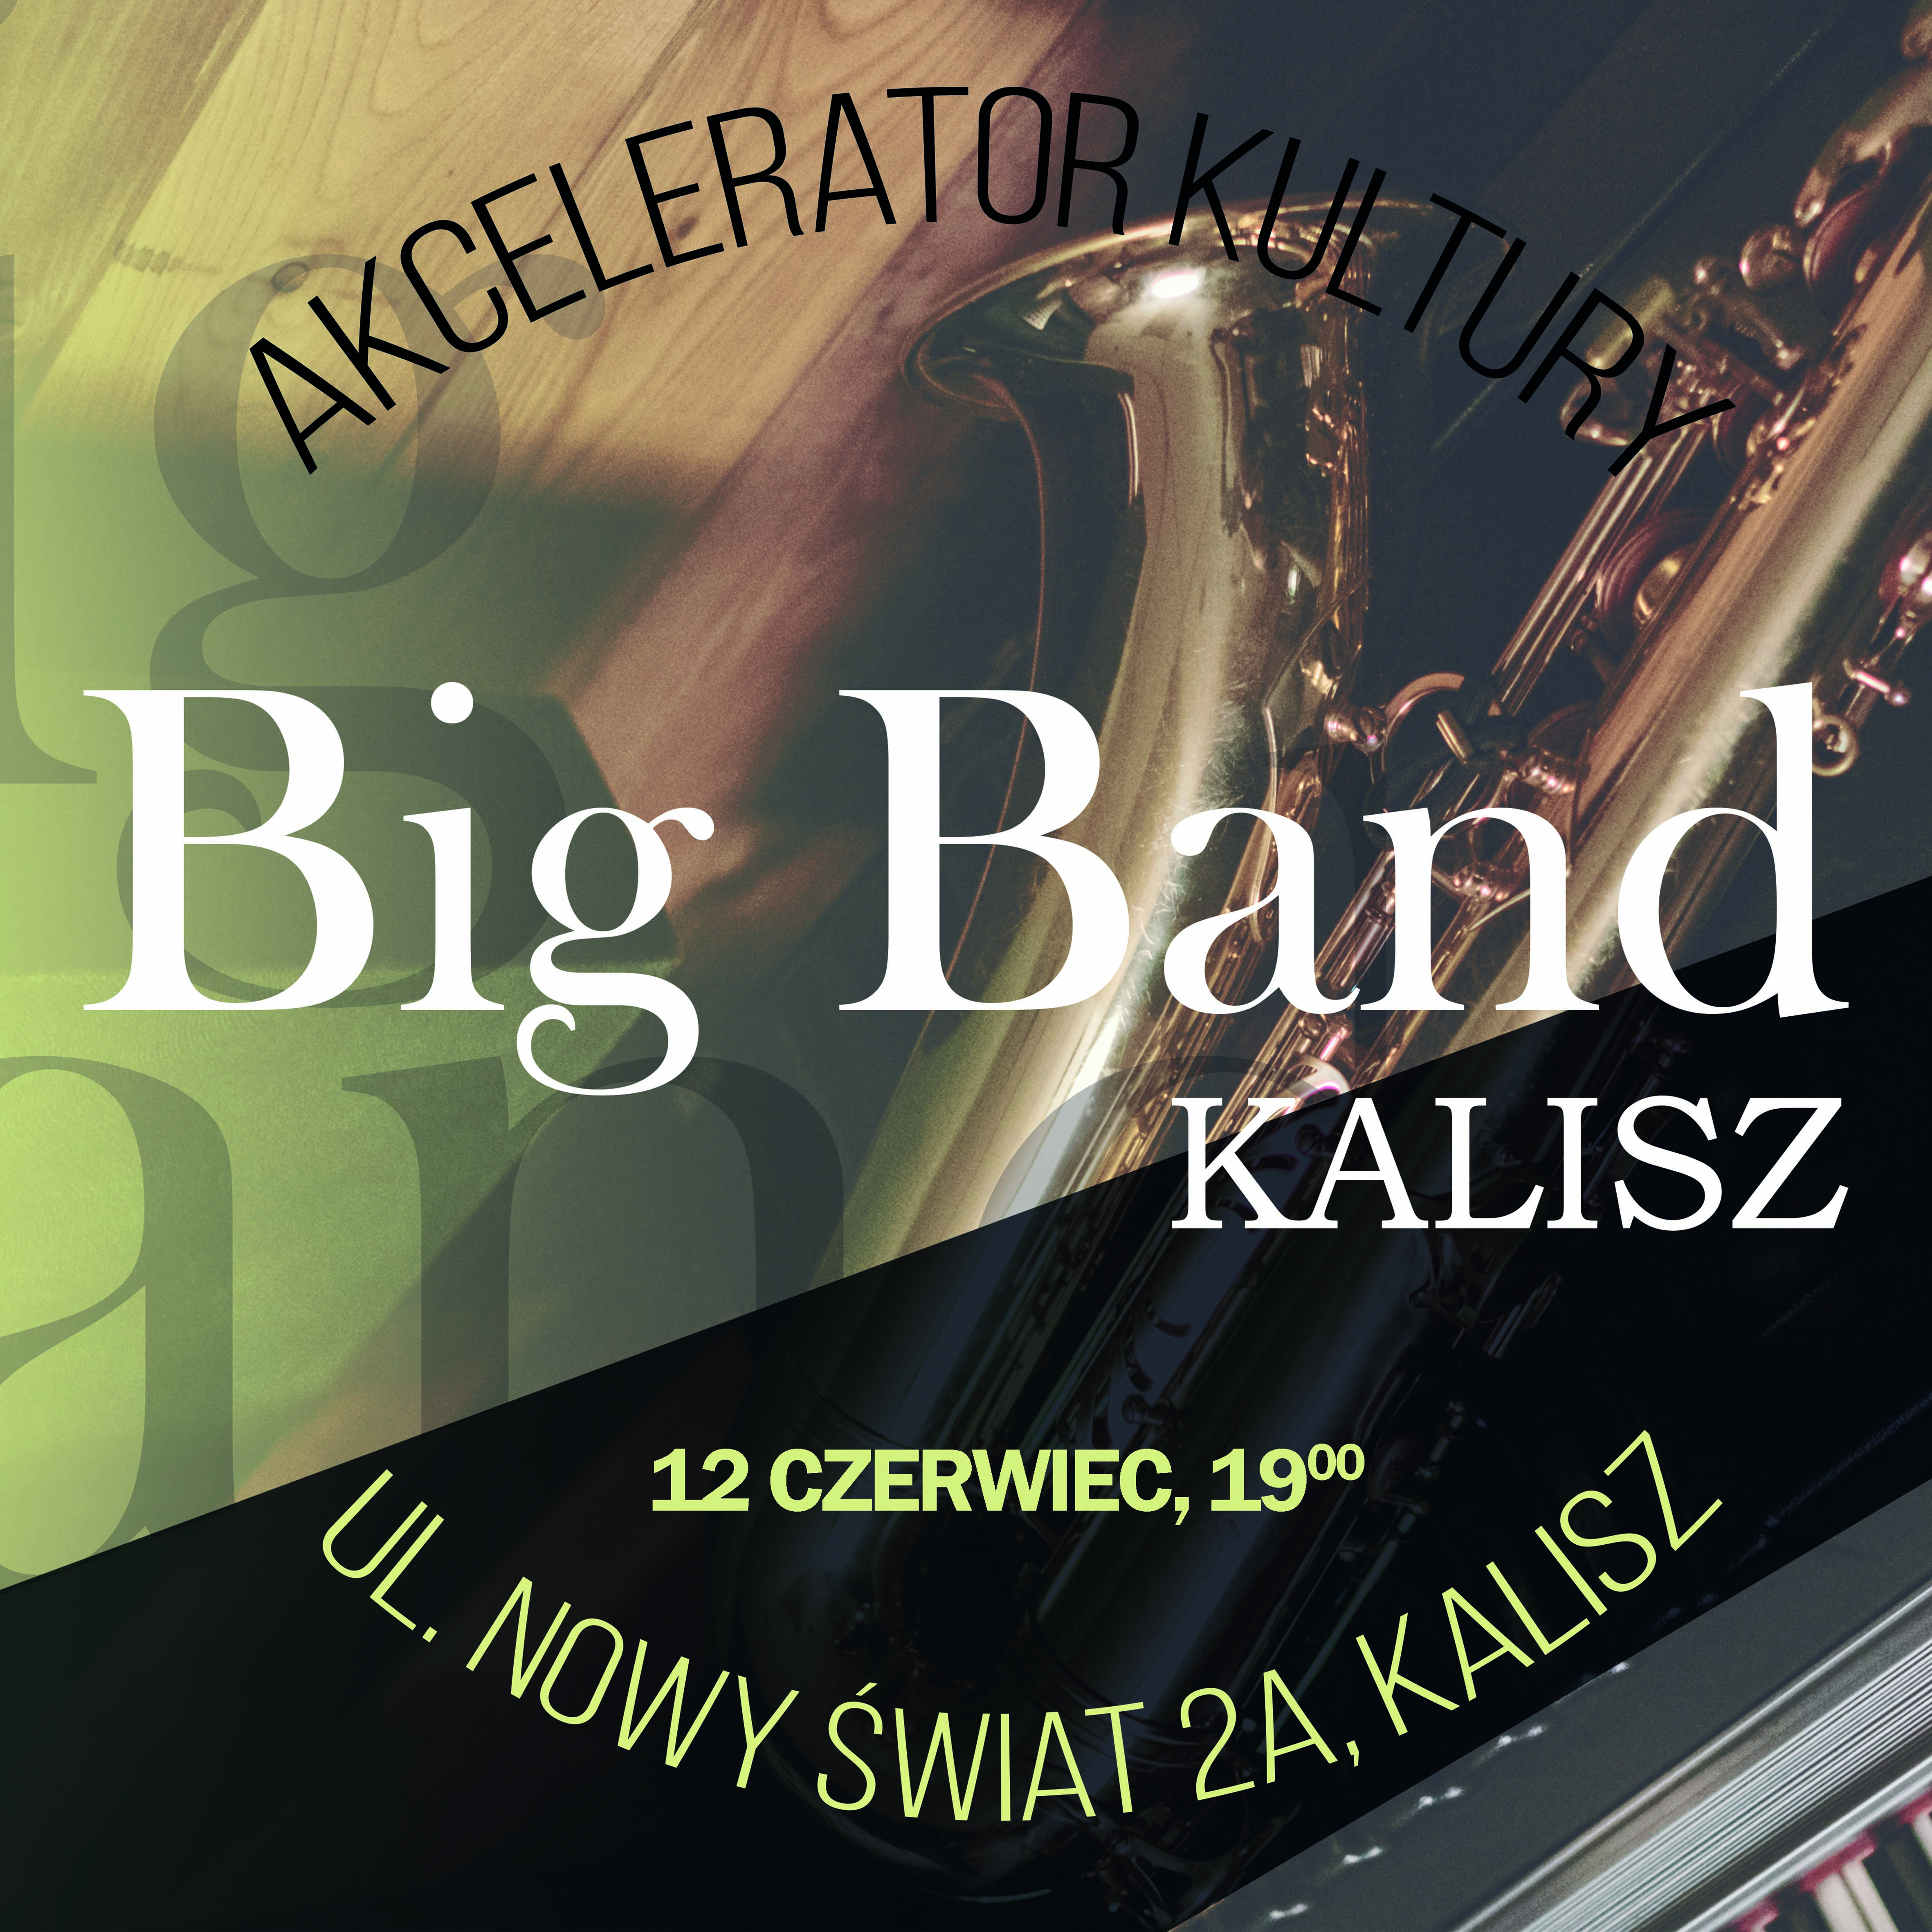 Big Band Kalisz